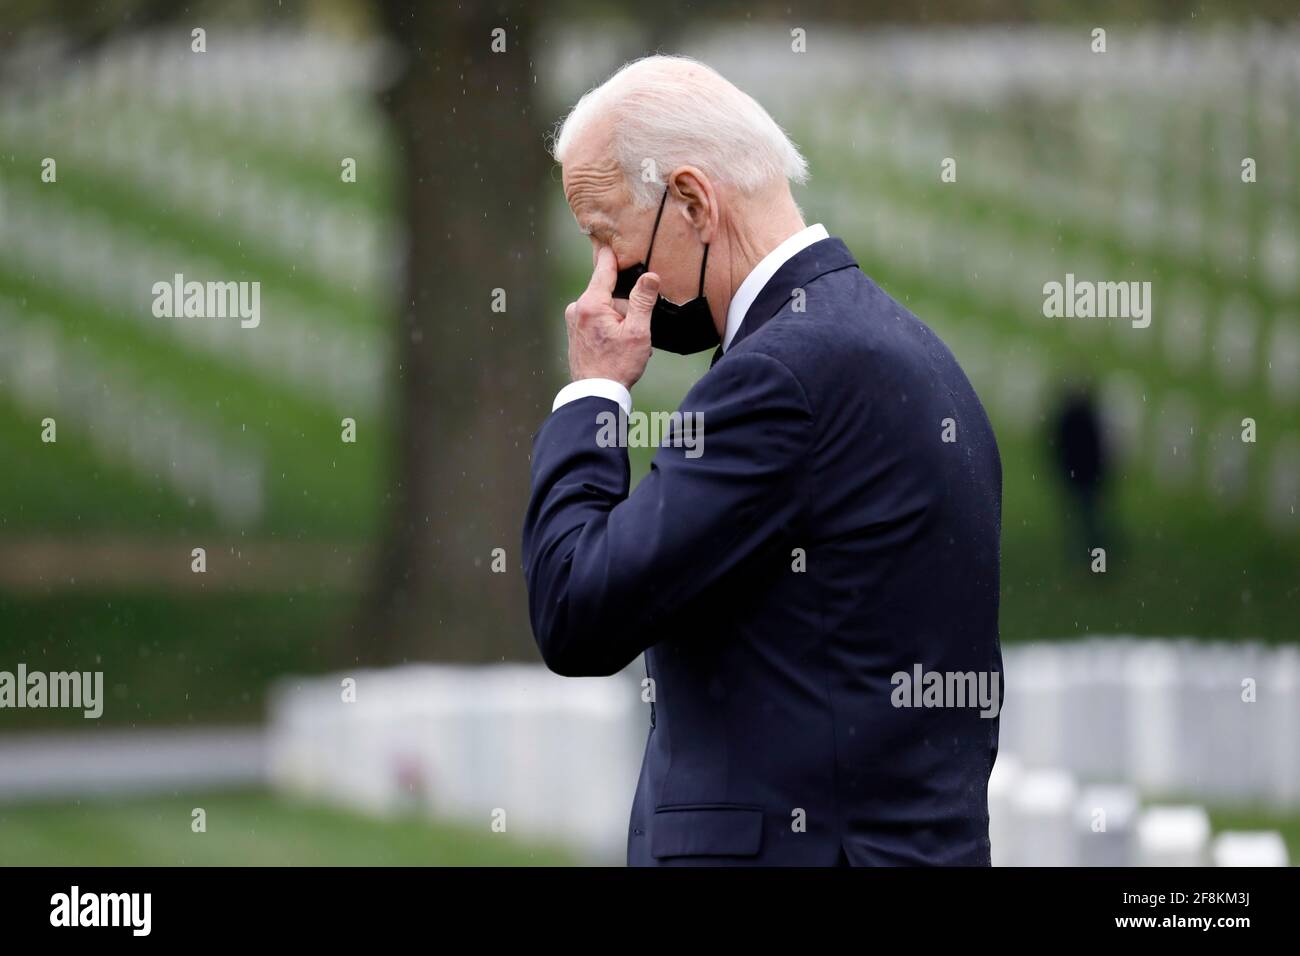 Washington, USA. April 2021. US-Präsident Joe Biden besucht am 14. April 2021 die Sektion 60 auf dem Arlington National Cemetery in Washington. Foto von Yuri Gripas/Pool/Sipa USA Quelle: SIPA USA/Alamy Live News Stockfoto